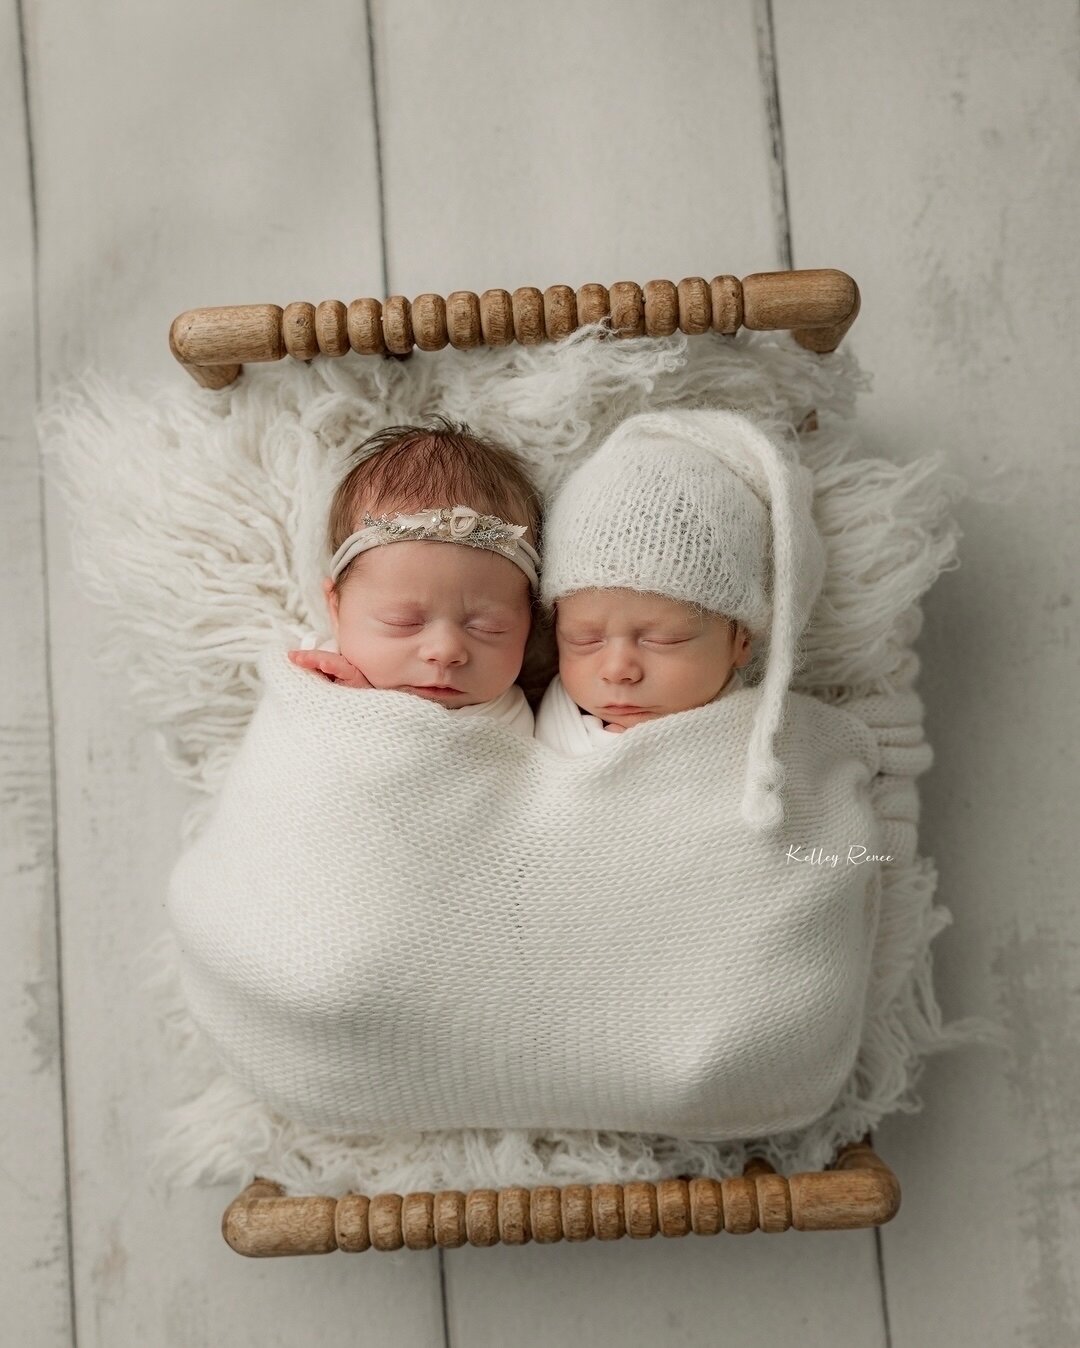 Double the love &lt;3
.
.
.
. #rh #richmondhill #richmondhillga #richmondhillgeorgia #savannah #savannahga #savannahgeorgia #richmondhillnewborn #richmondhillganewborn #twins # newborn twins #savannahnewborn #newbornphotographer #savannahganewborn #p